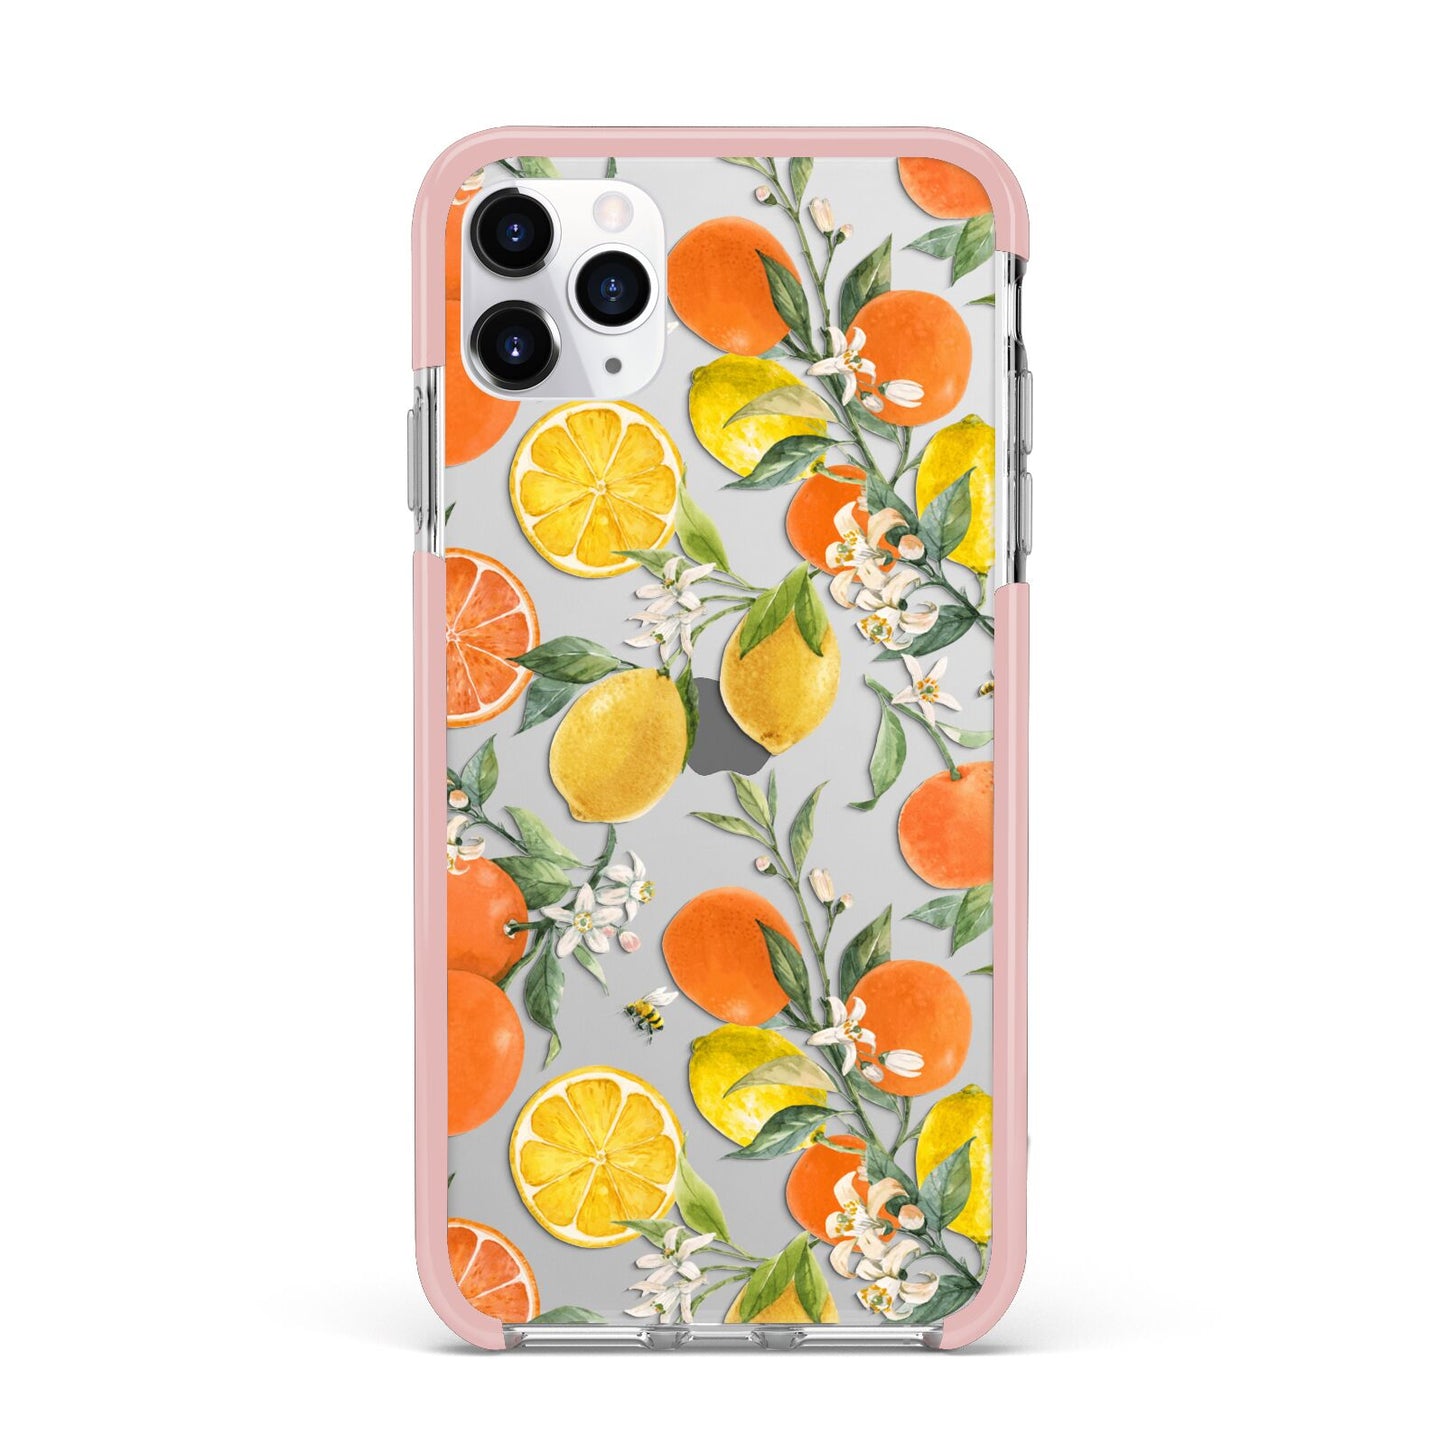 Lemons and Oranges iPhone 11 Pro Max Impact Pink Edge Case